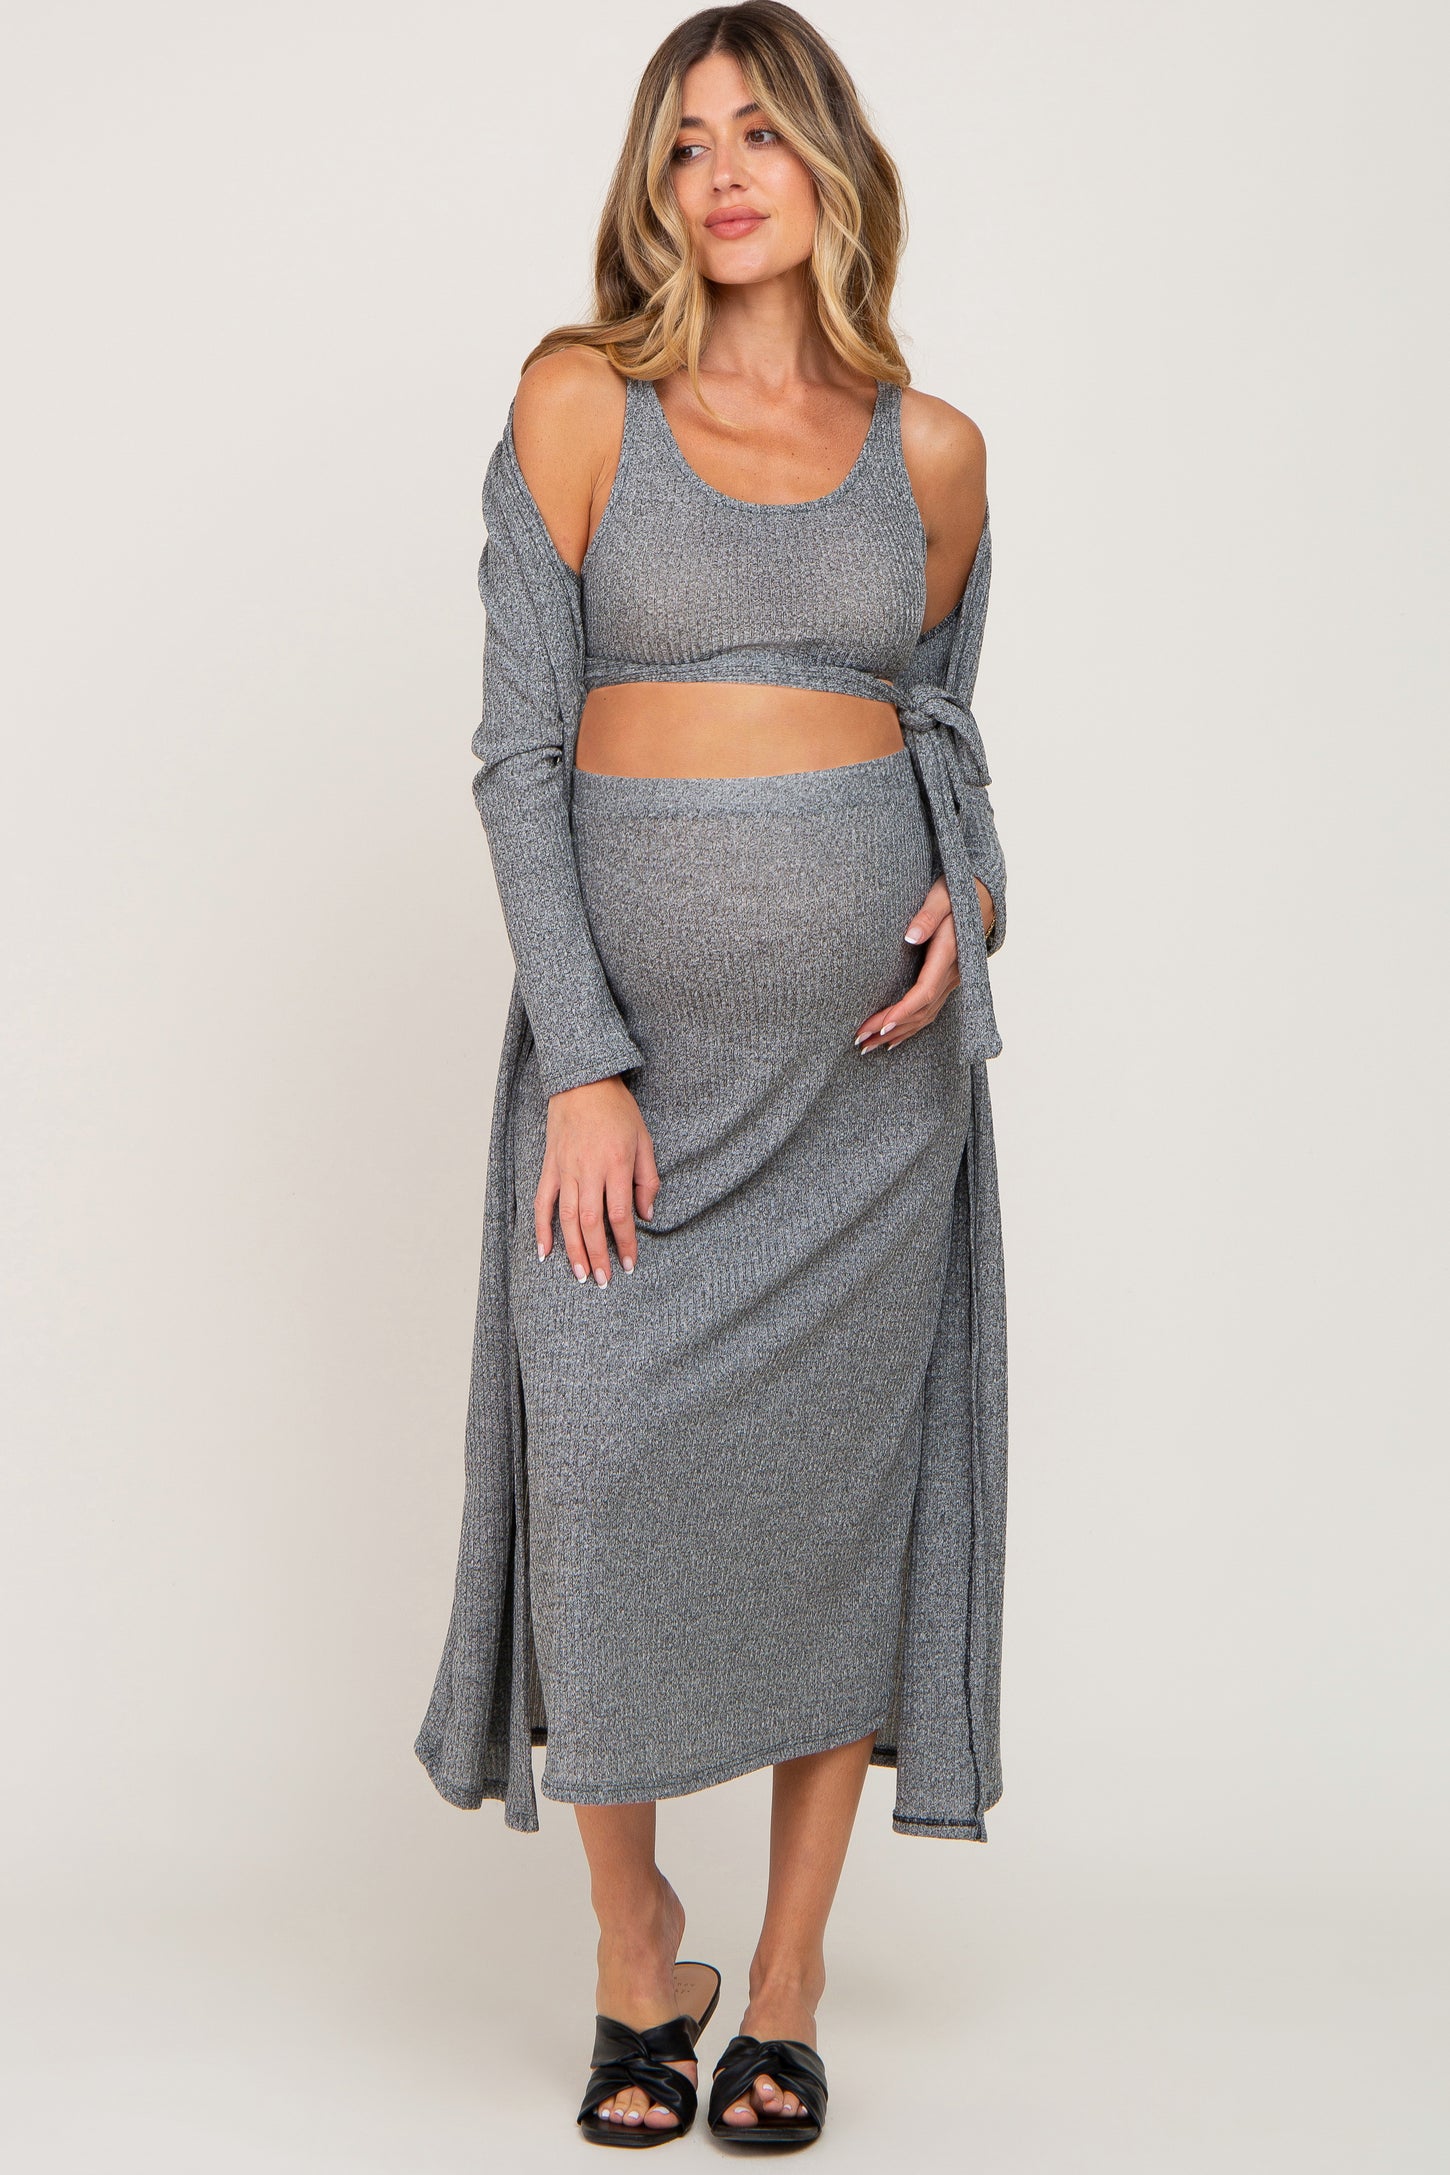 Grey 3-Piece Skirt and Cardigan Maternity Set